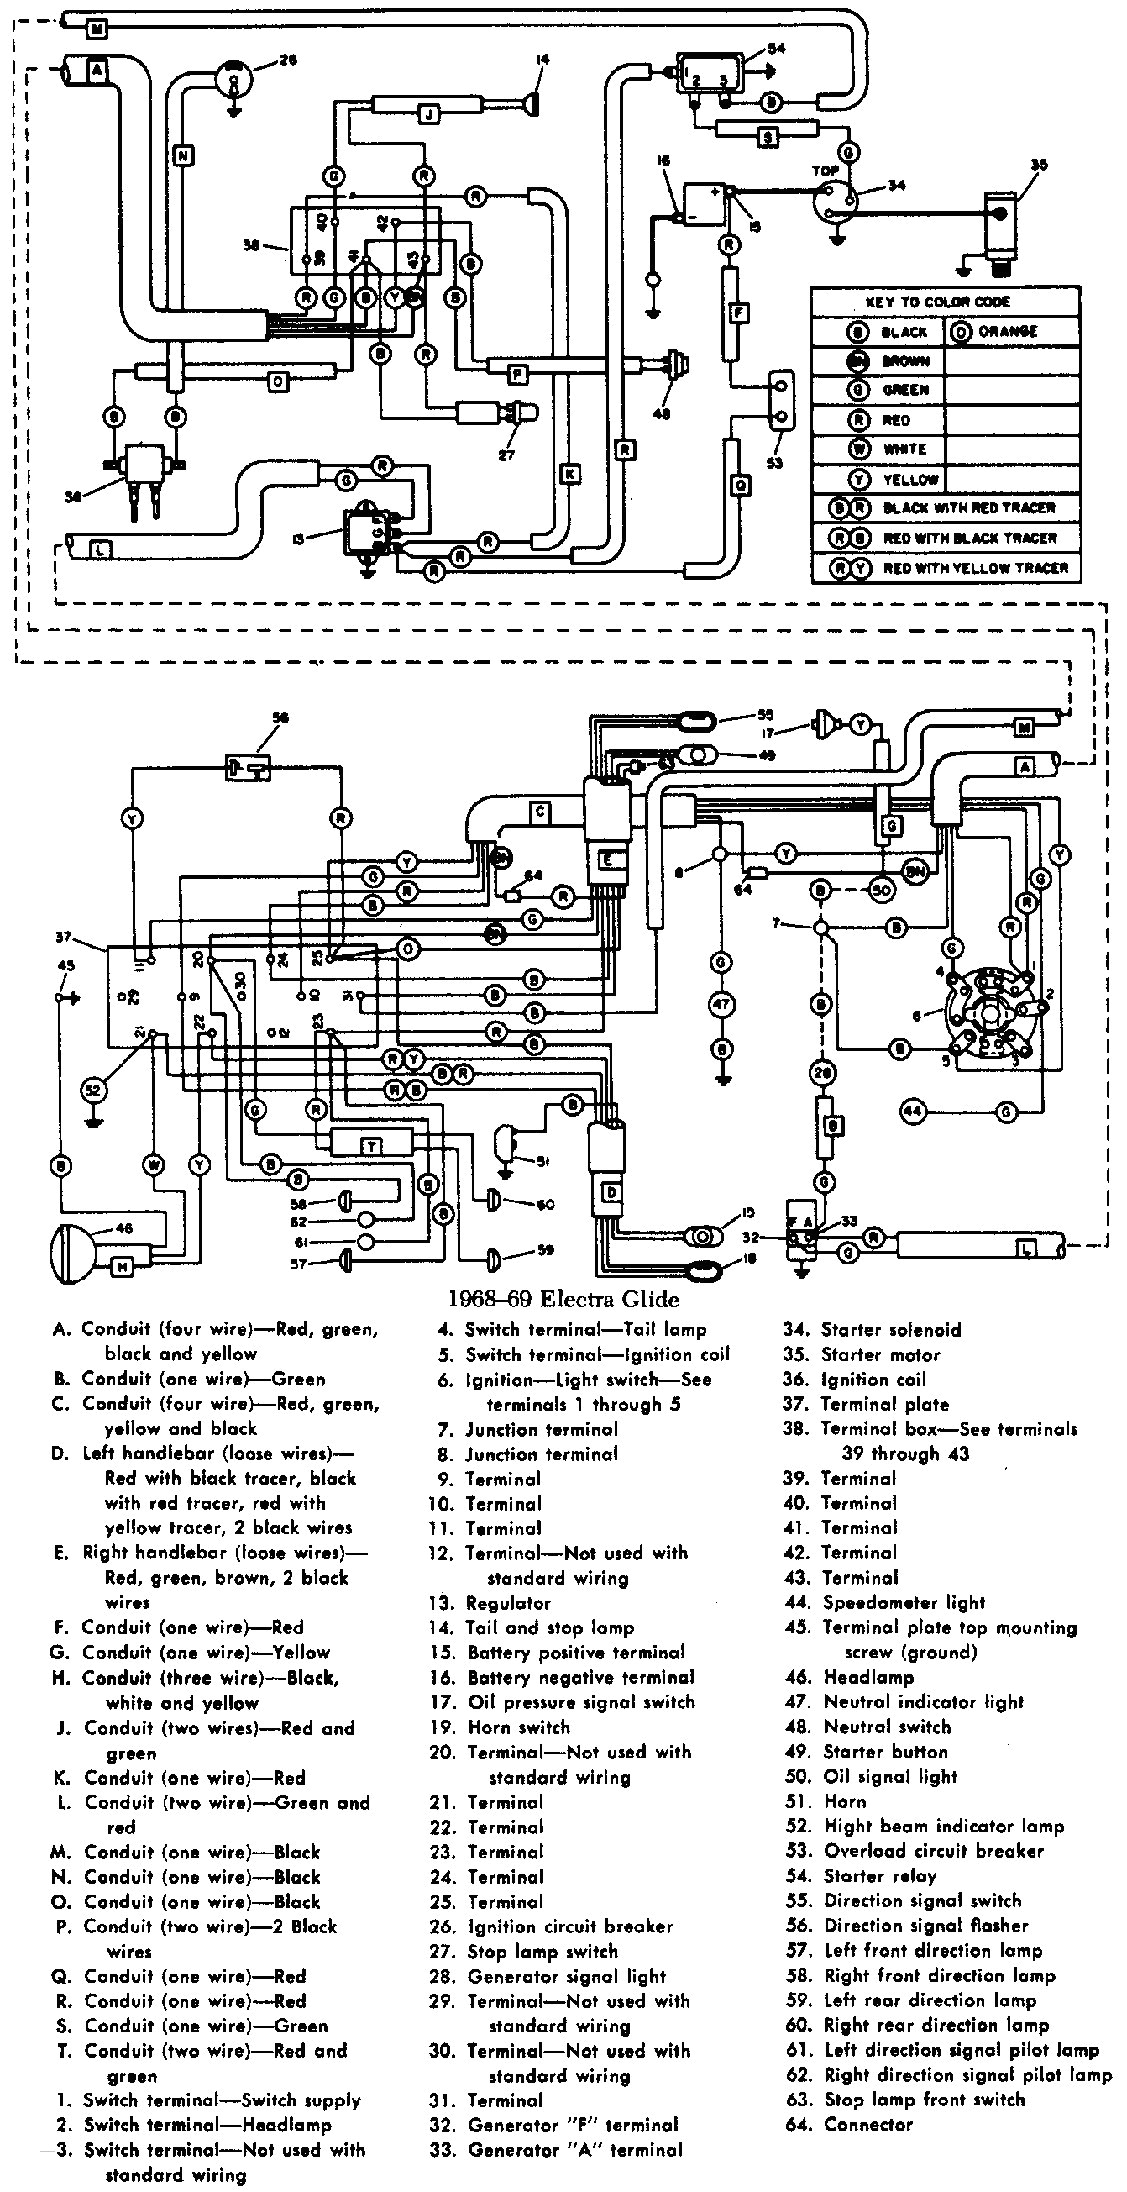 harley davidson radio wiring harness diagram elegant harley davidson radio wiring diagram new er diagram double line free jpg